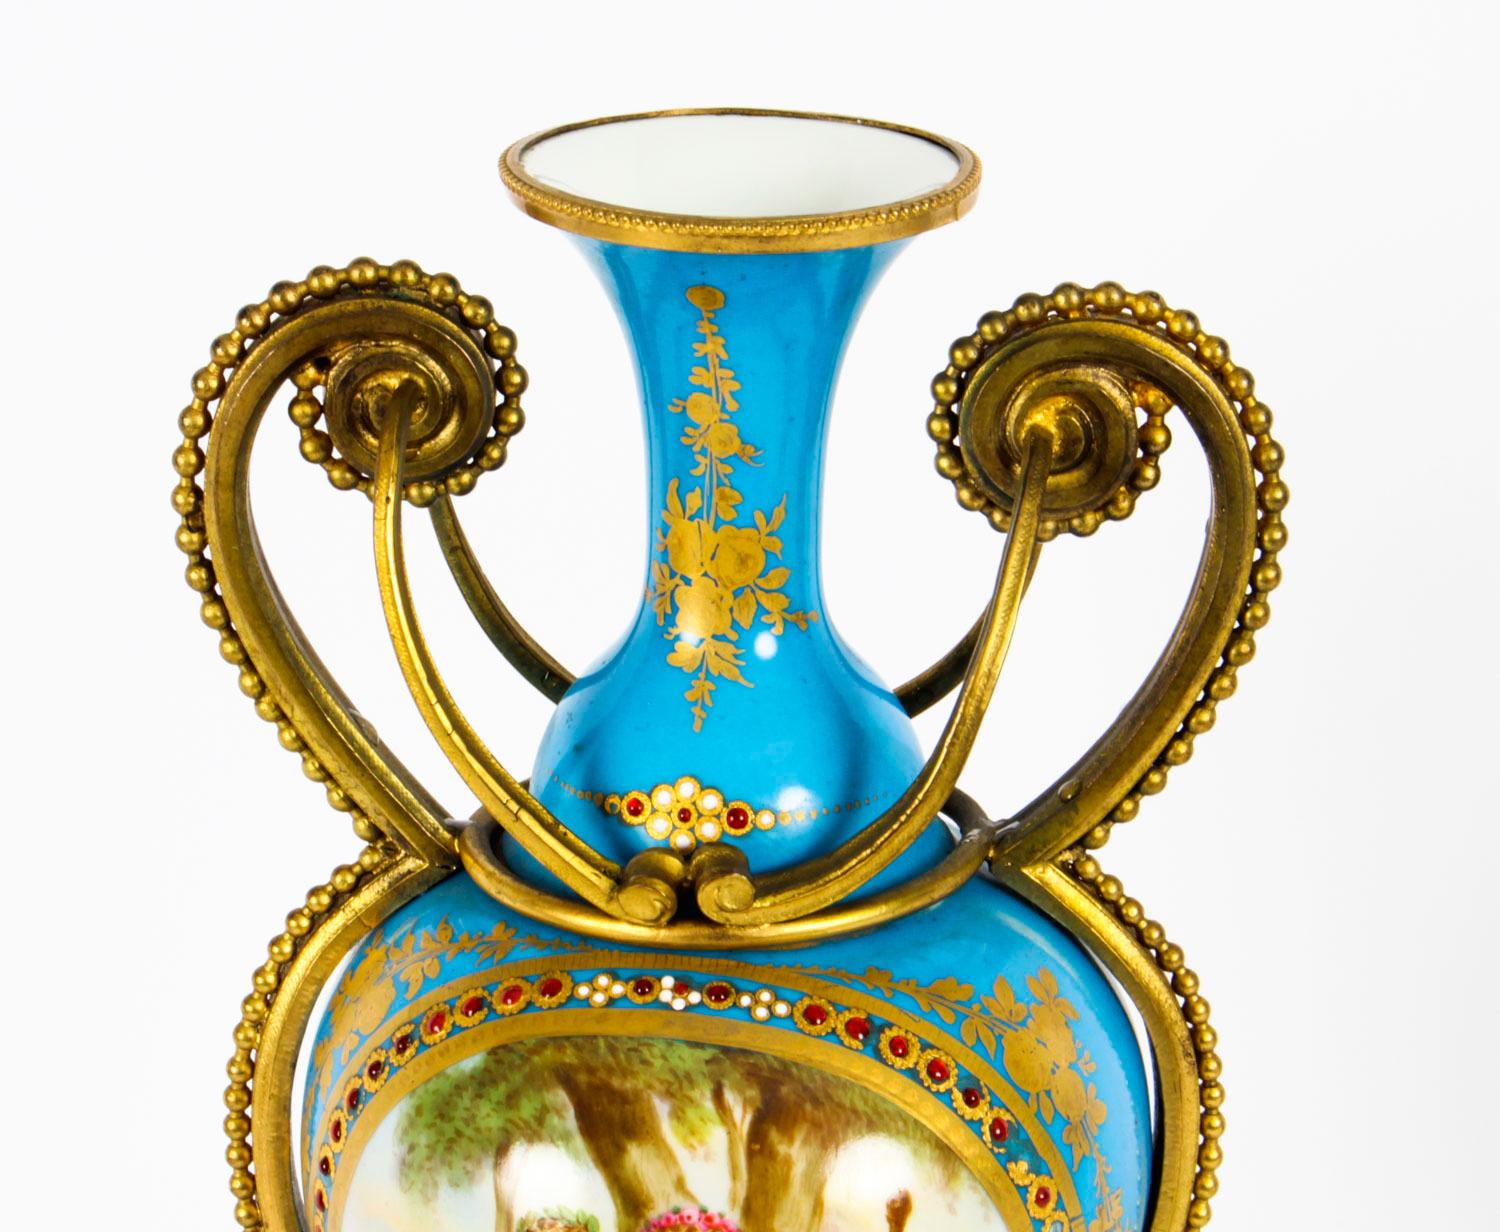 Antique Pair of French Ormolu Mounted Bleu Celeste Sèvres Vases, 19th Century For Sale 1